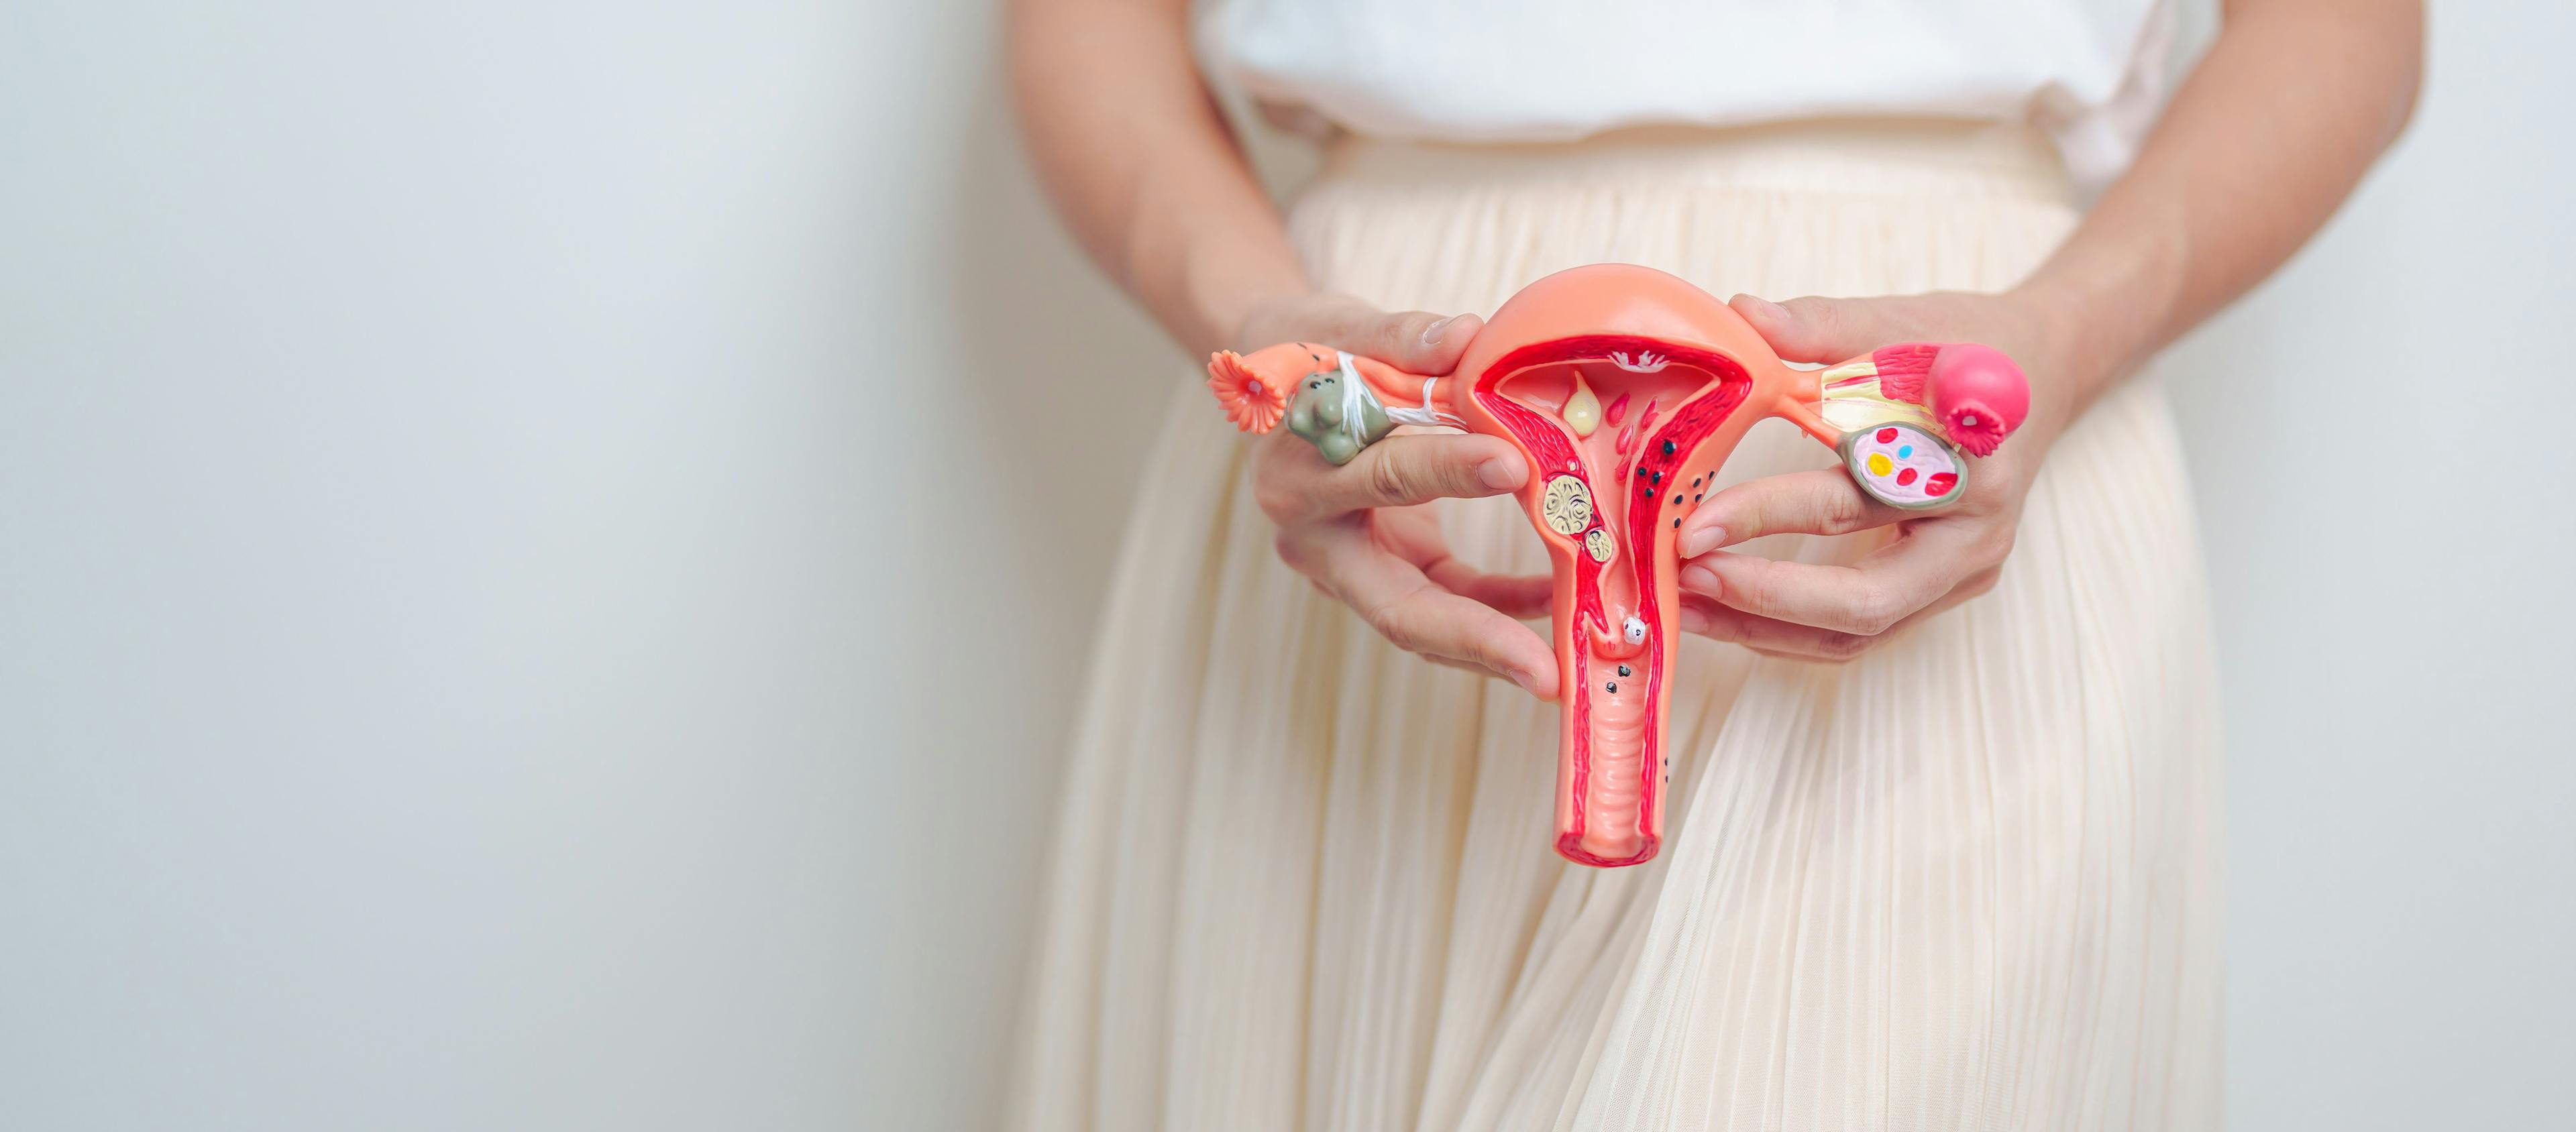 Treating heavy menstrual bleeding: Levonorgestrel system vs combined oral contraceptives | Image Credit: © Jo Panuwat D - © Jo Panuwat D - stock.adobe.com.